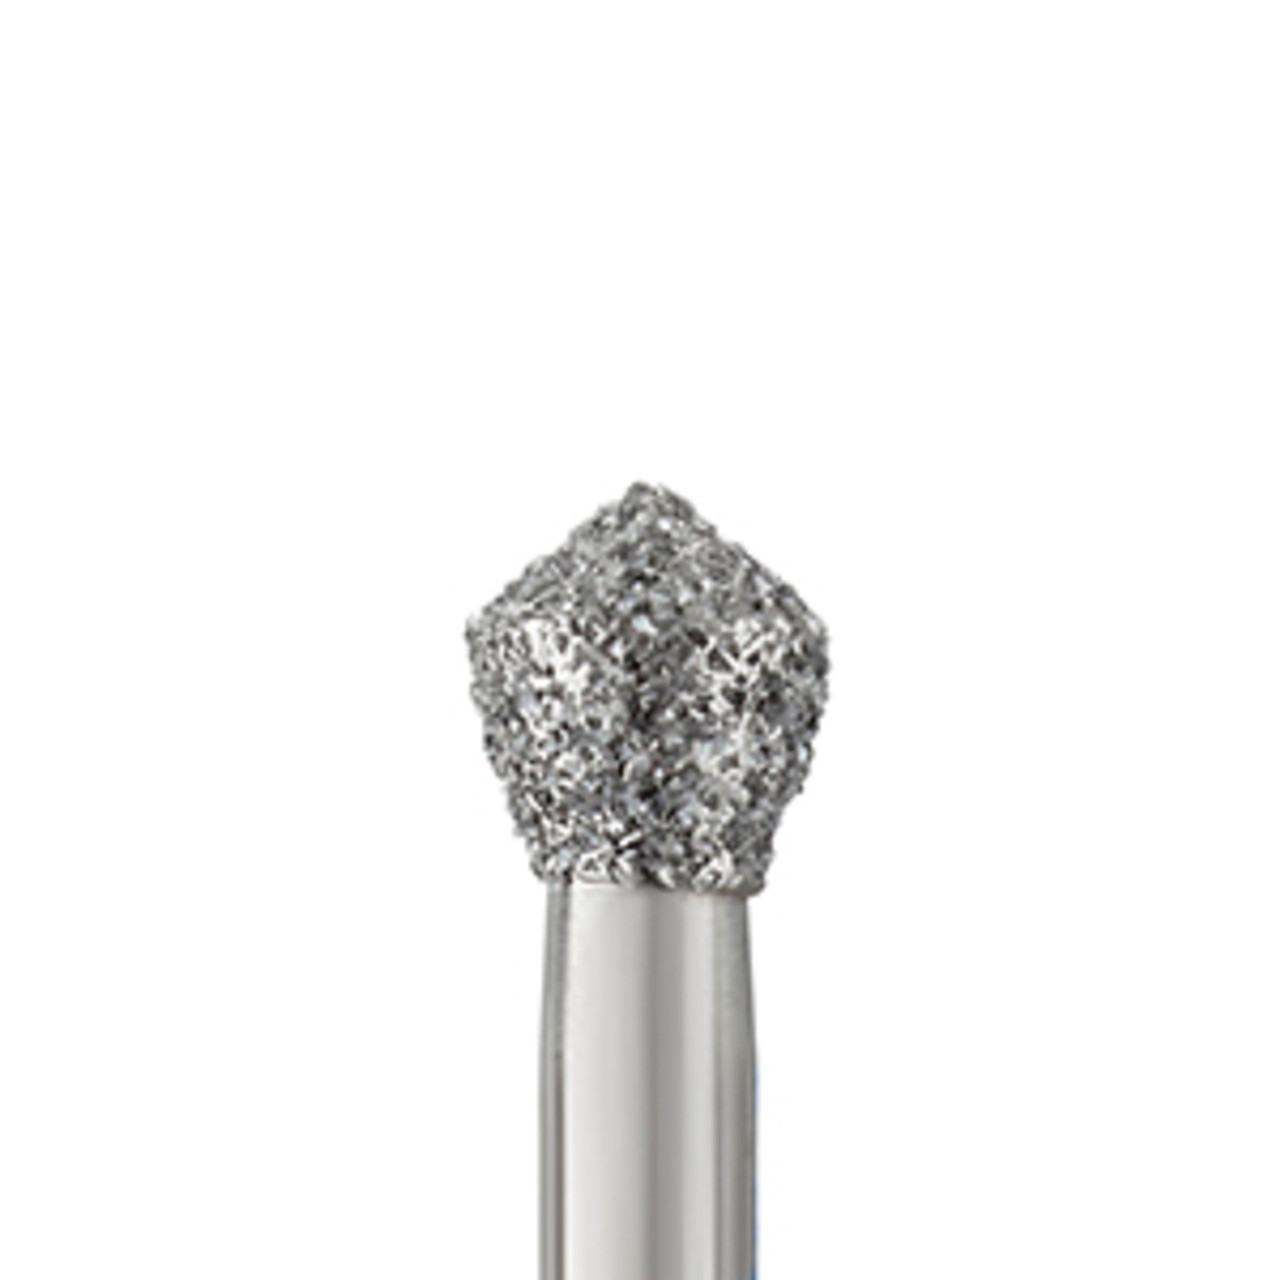 Parkell Sterile Diamond Bur, Acorn, Medium 905-027M, 10/pk